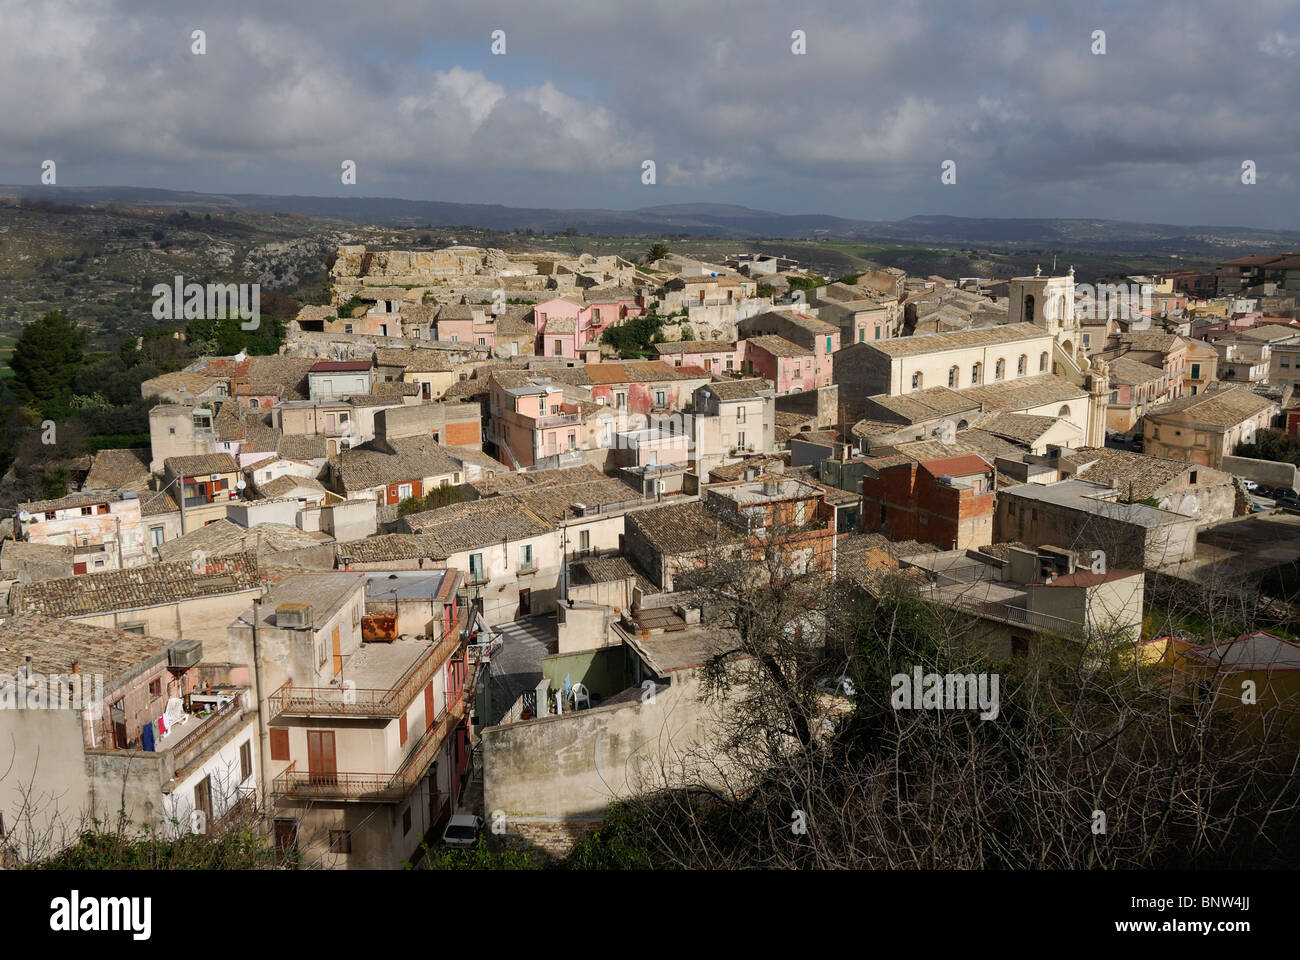 Palazzolo Acreide. Sicily. Italy. Stock Photo